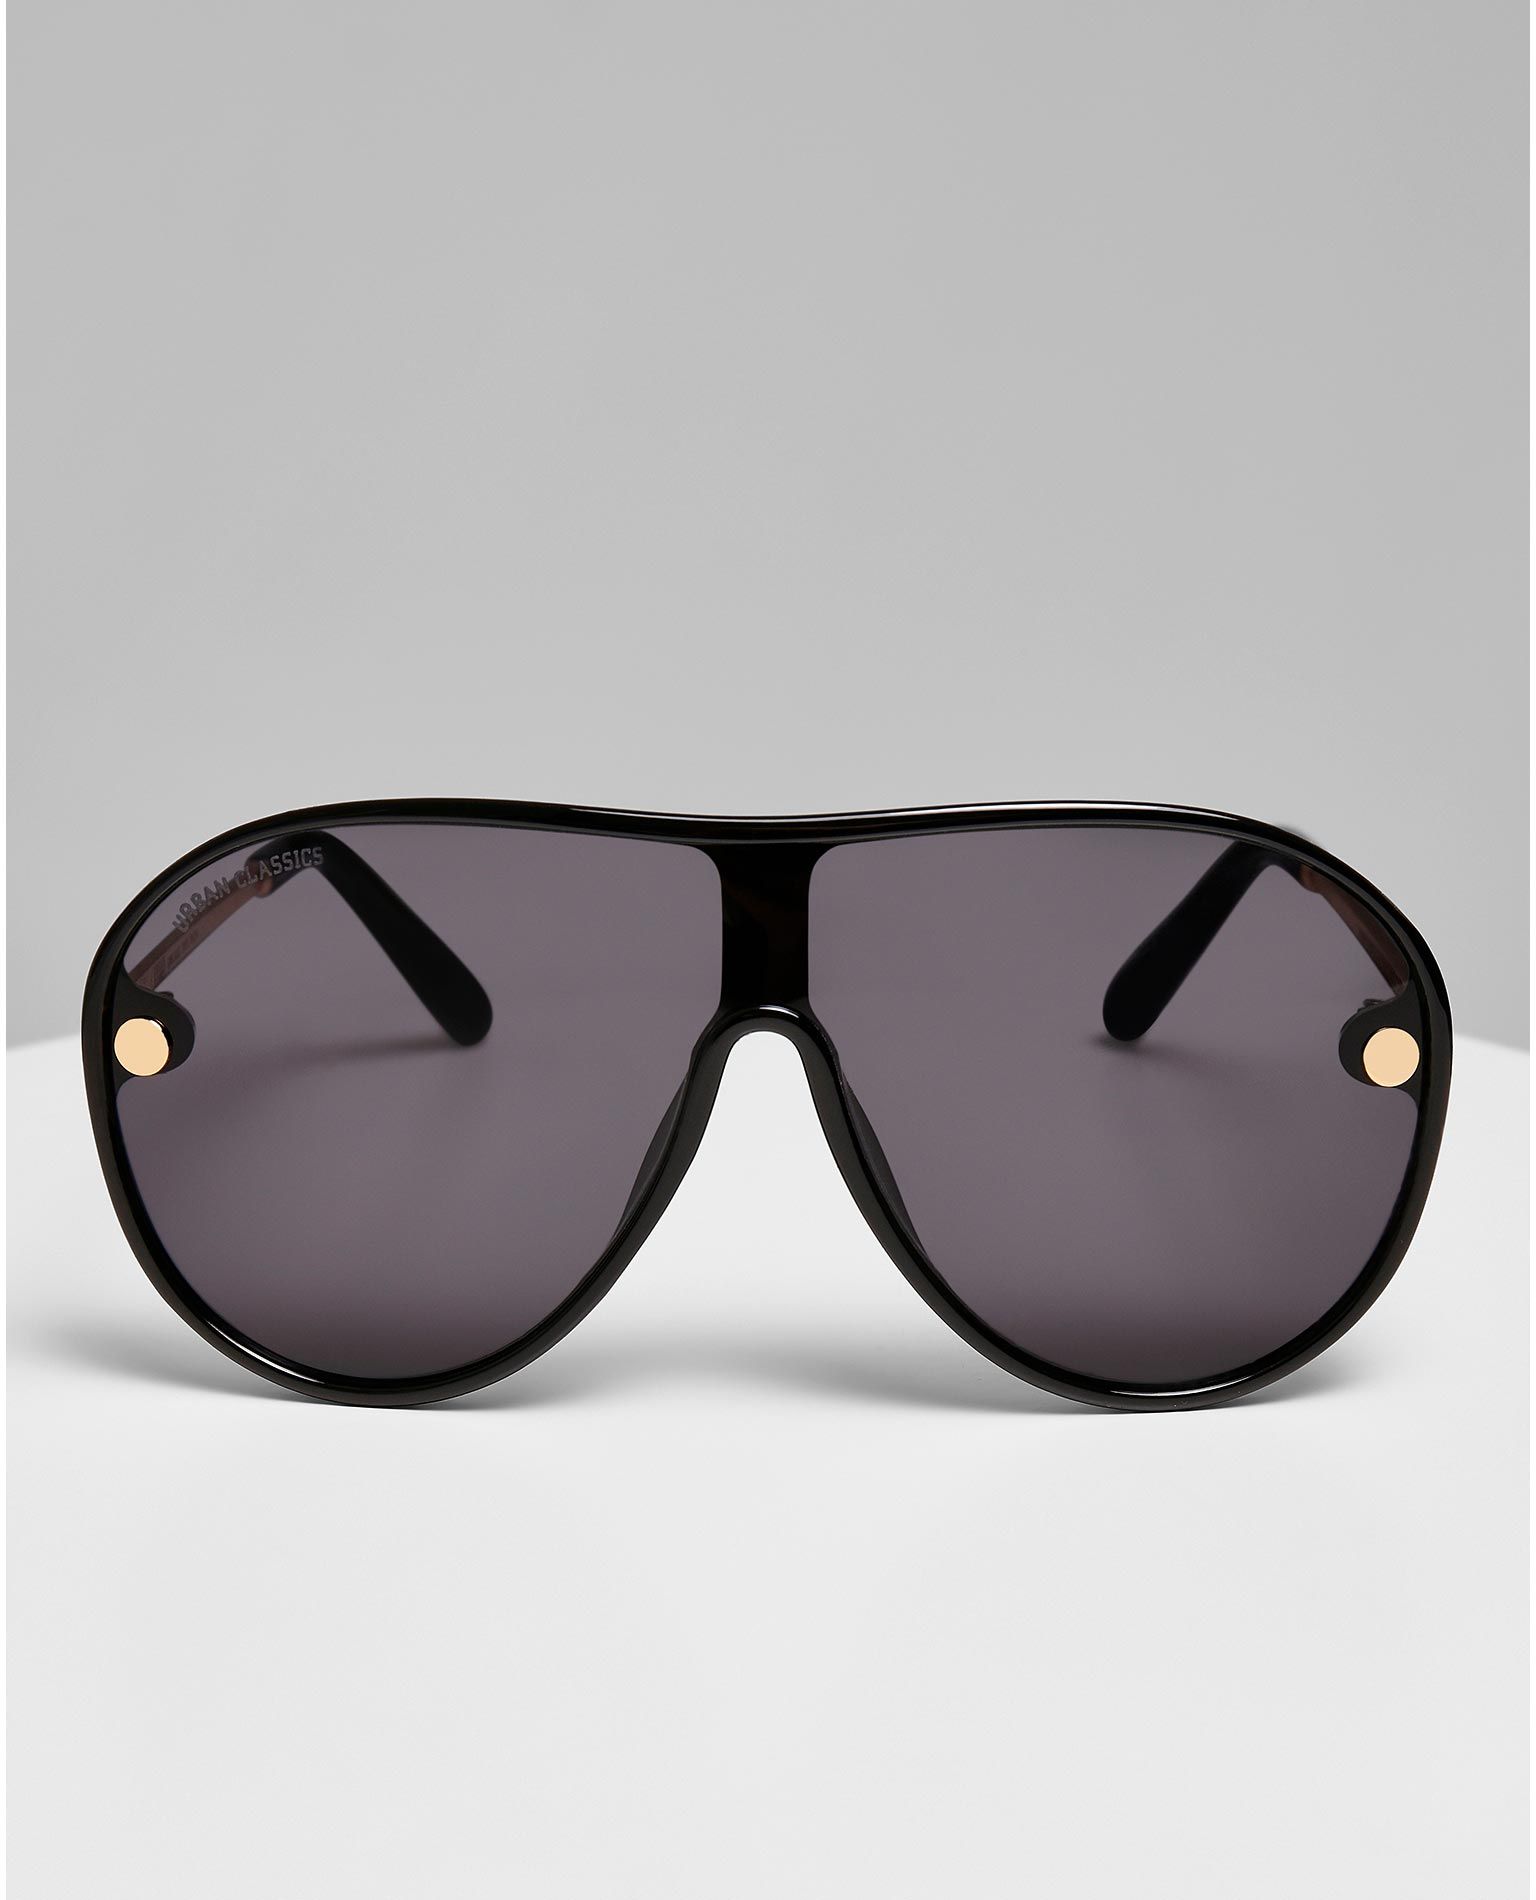 Naxos Sunglasses Urban Classics